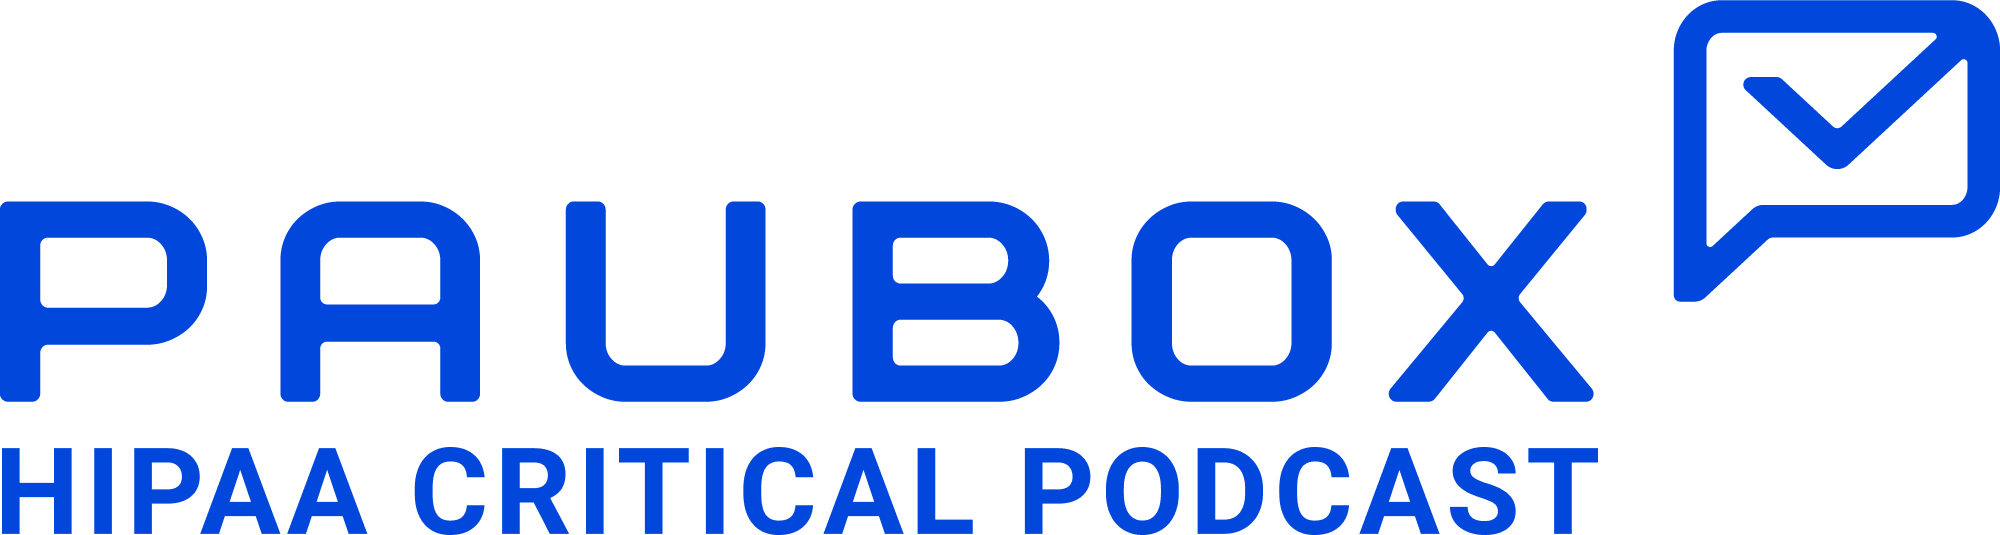 Paubox Hipaa Critical Podcast logo